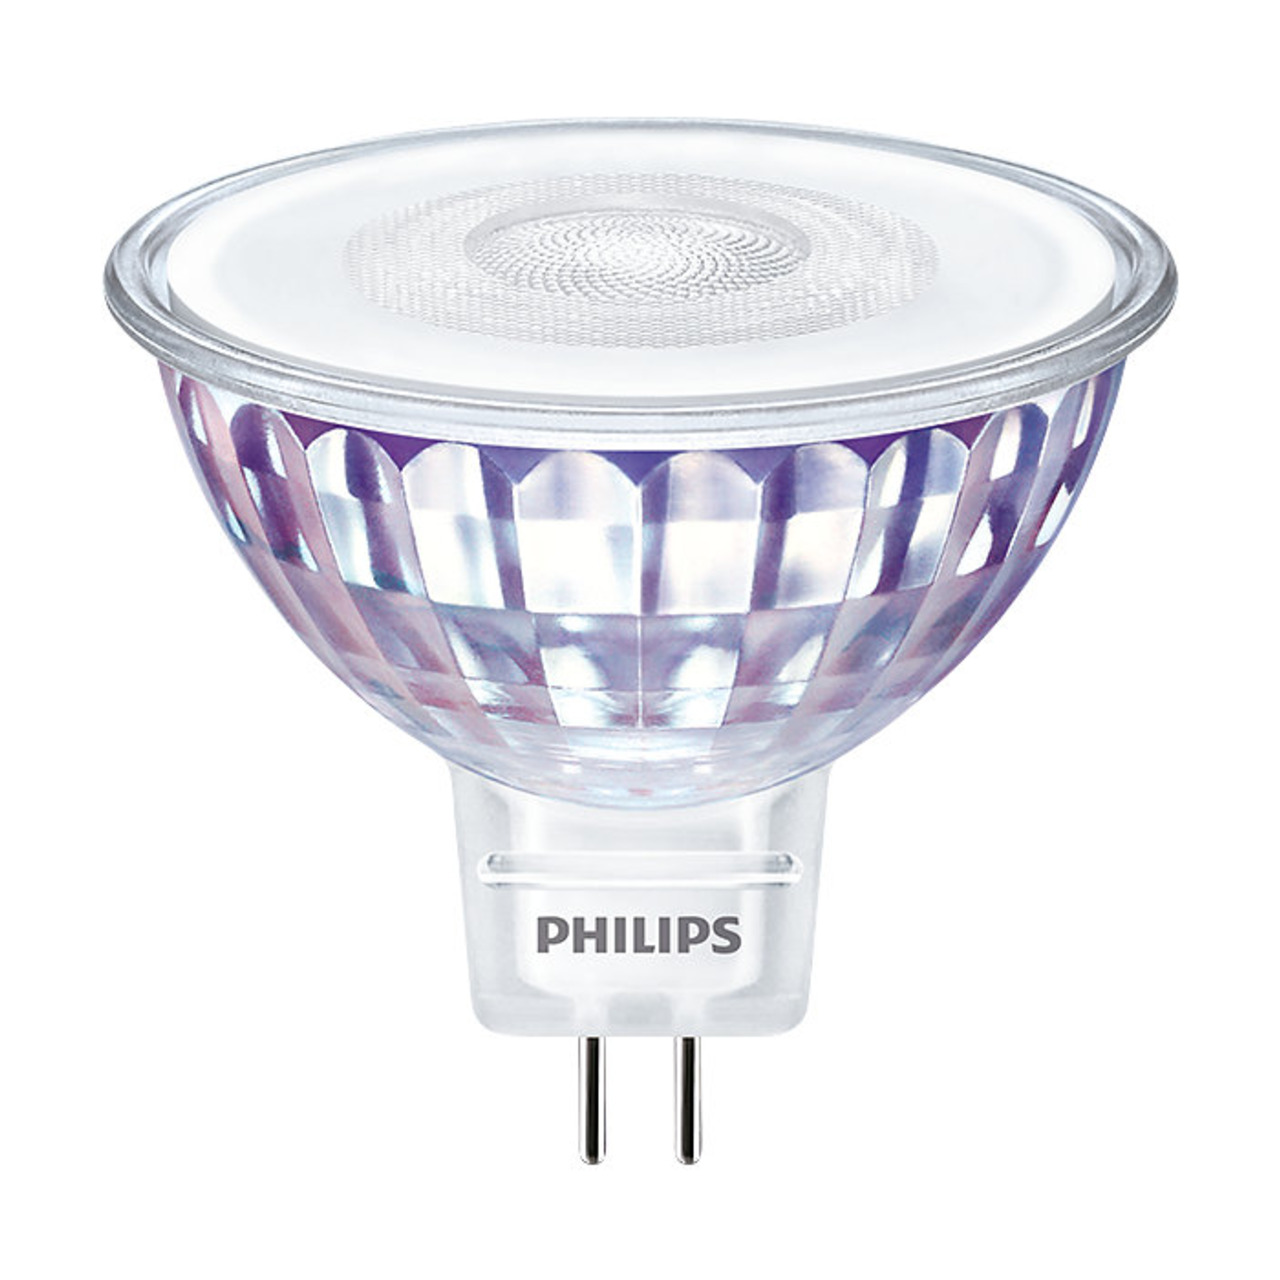 Philips 7-5-W-GU5-3-LED-Lampe Master LEDspot Value- MR16- 630 lm- warmweiss (3000 K)- 60- dimmbar